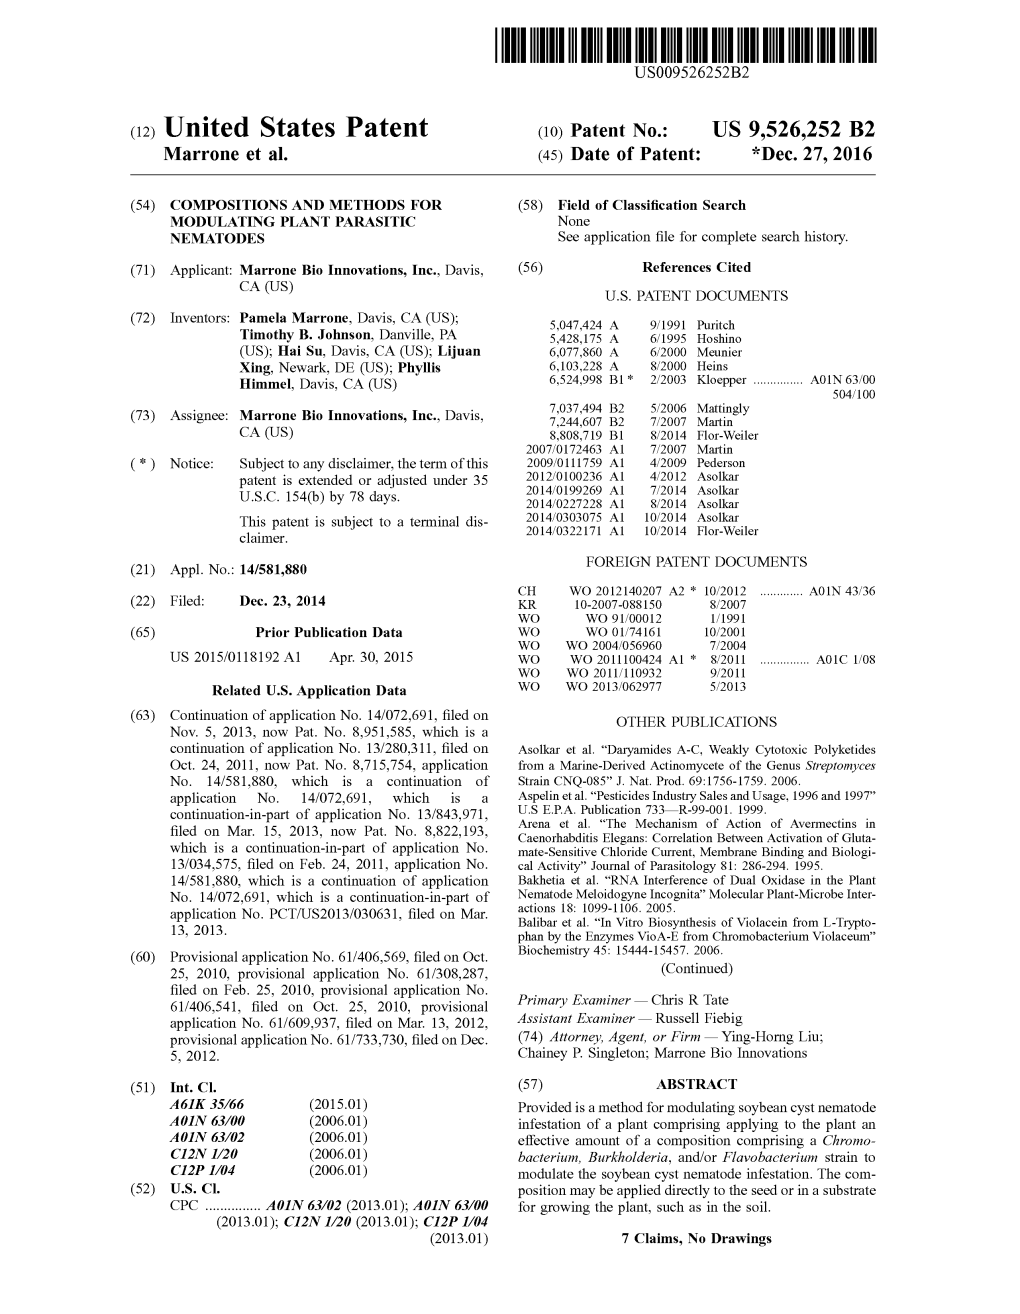 (12) United States Patent (10) Patent No.: US 9,526,252 B2 Marrone Et Al